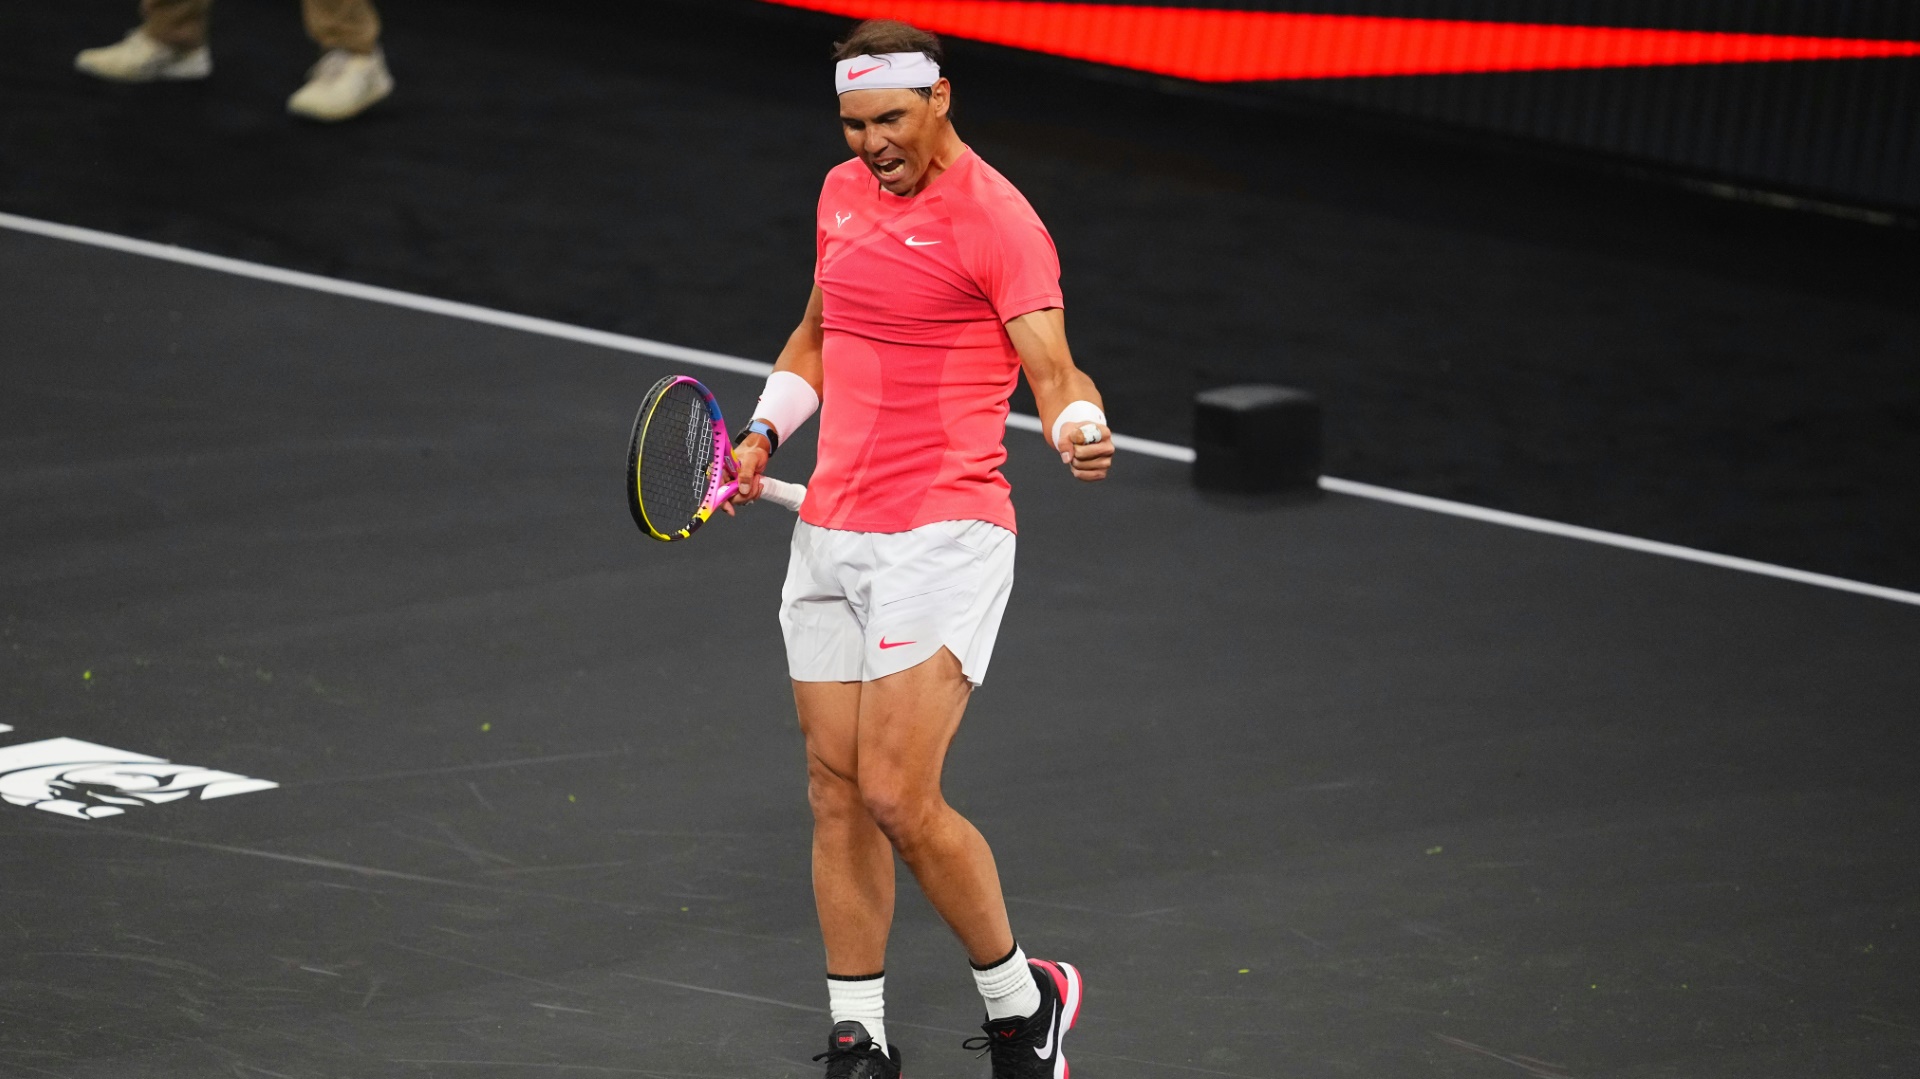 Die Fitness stimmt bei Tennis-Star Rafael Nadal